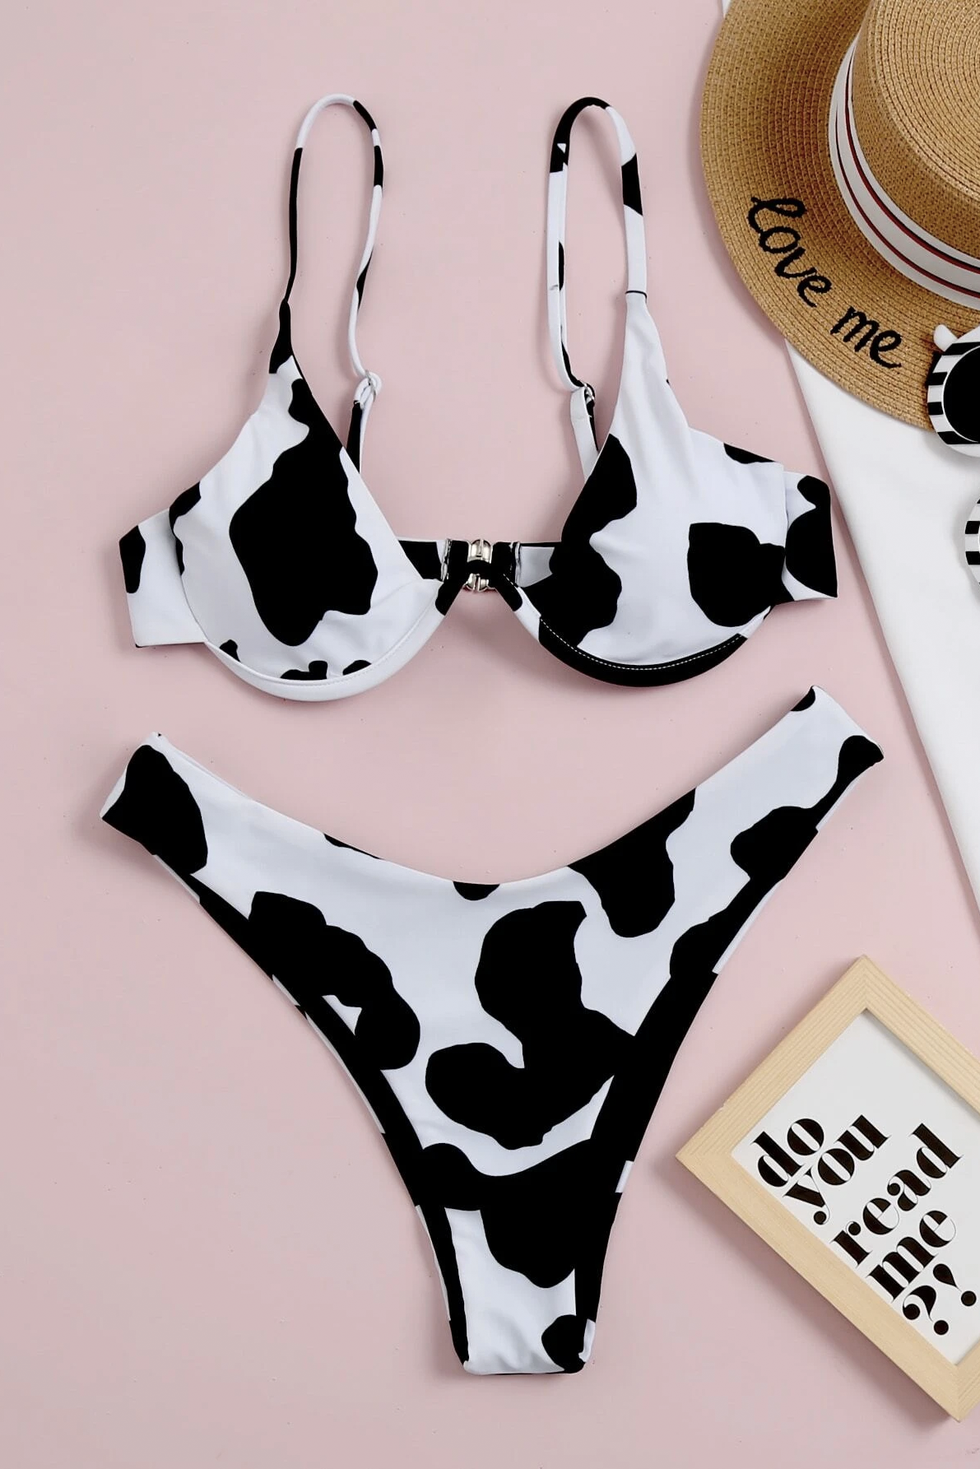 shein cow print bikini similar to jordyn woods' style